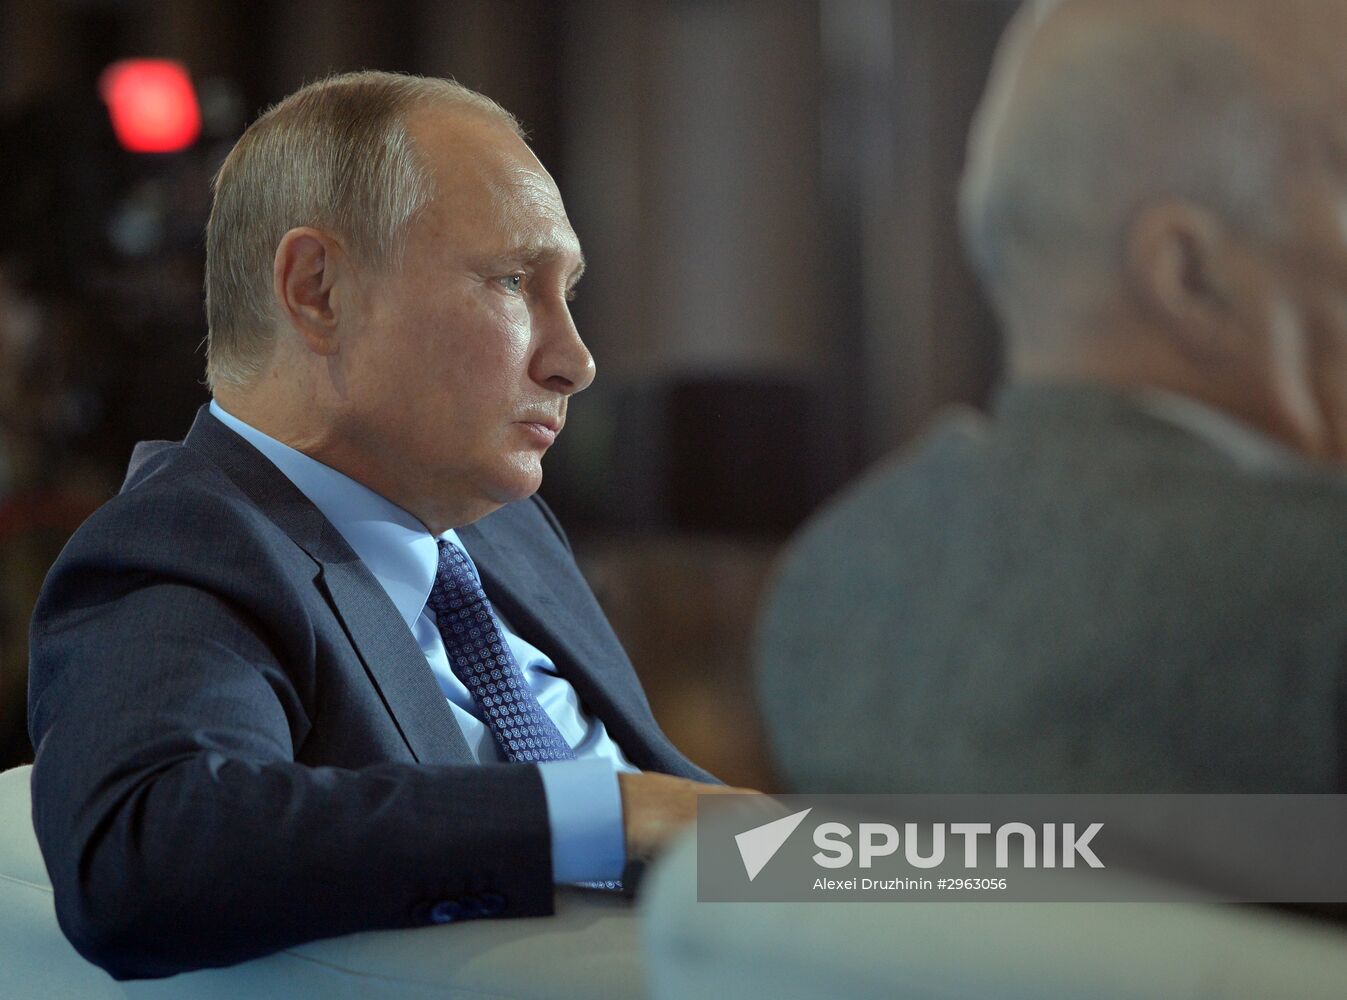 President Vladimir Putin's working visit to Crimea